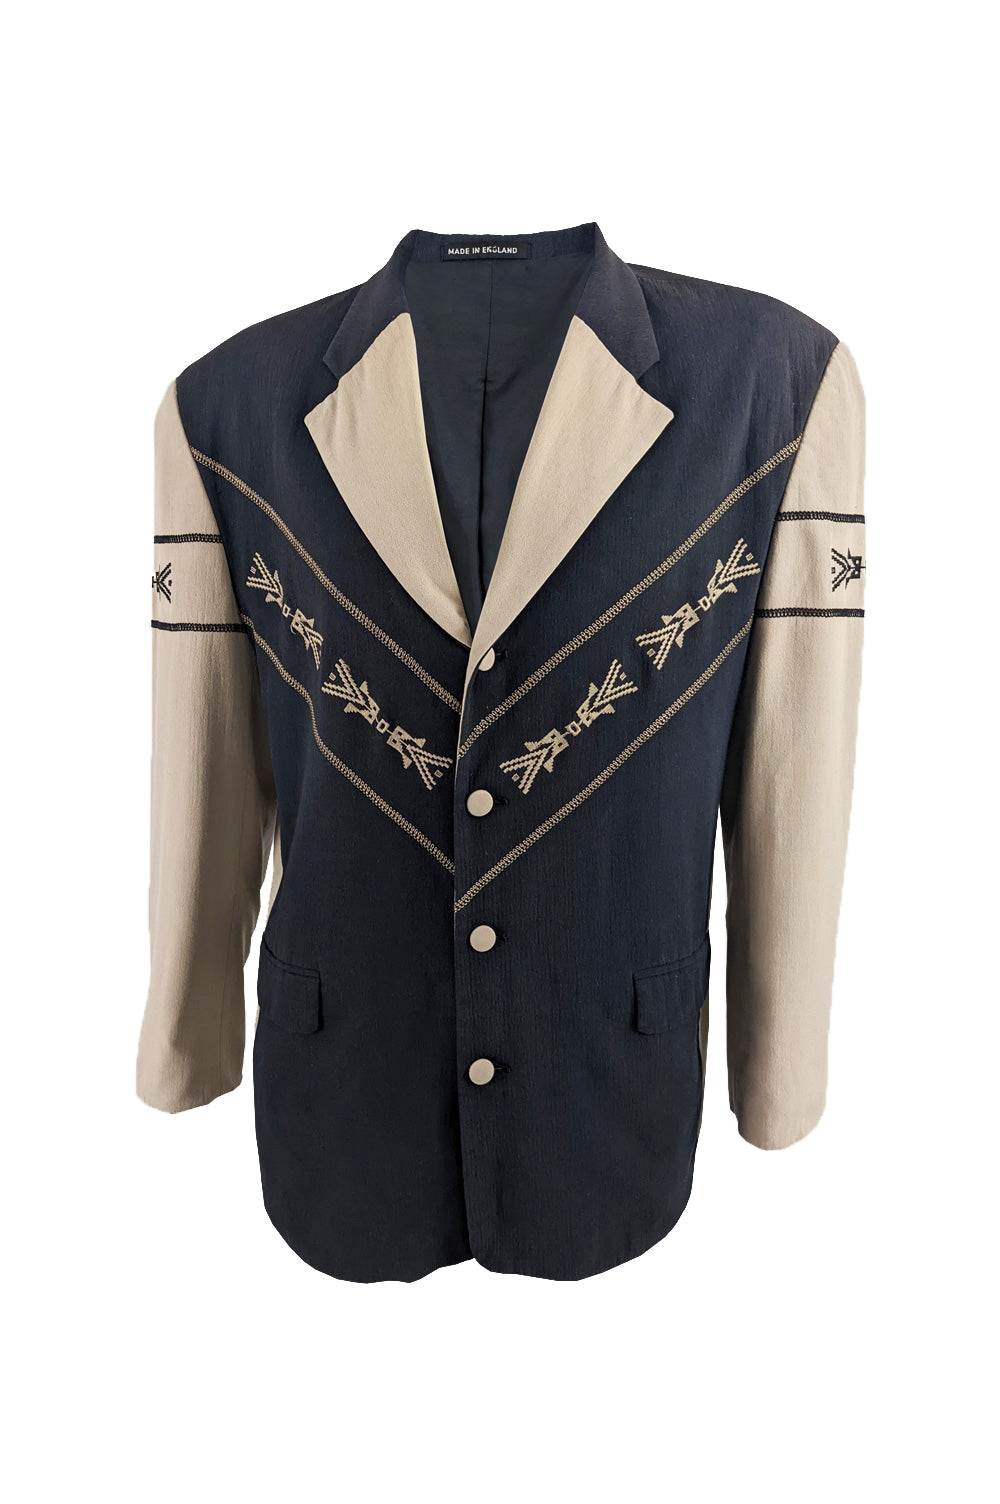 Vintage Mens Rockabilly Style Embroidered Blazer Jacket, 1980s